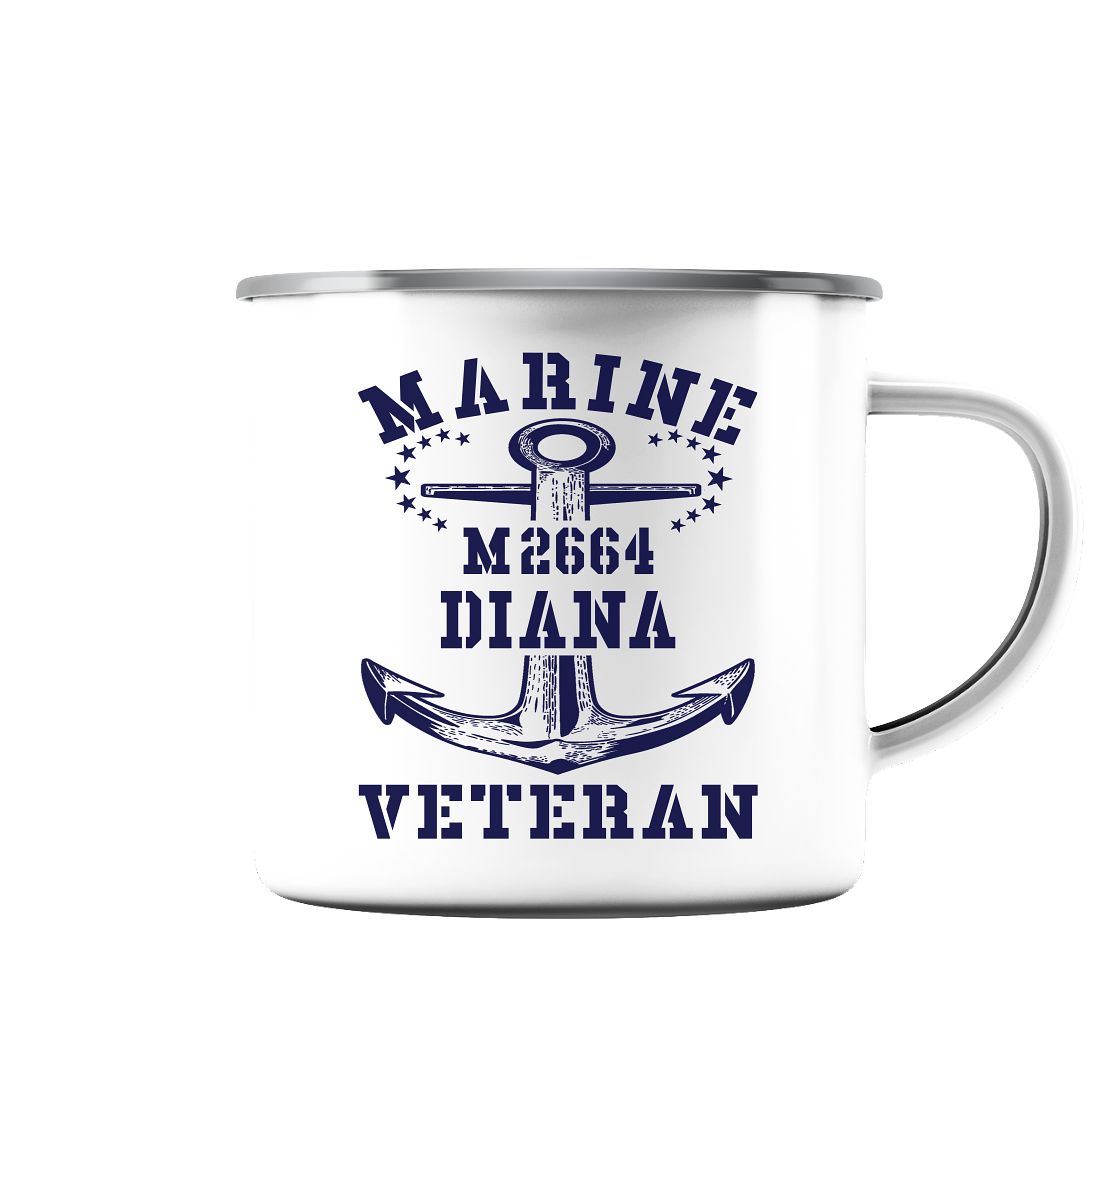 BiMi M2664 DIANA Marine Veteran - Emaille Tasse (Silber)